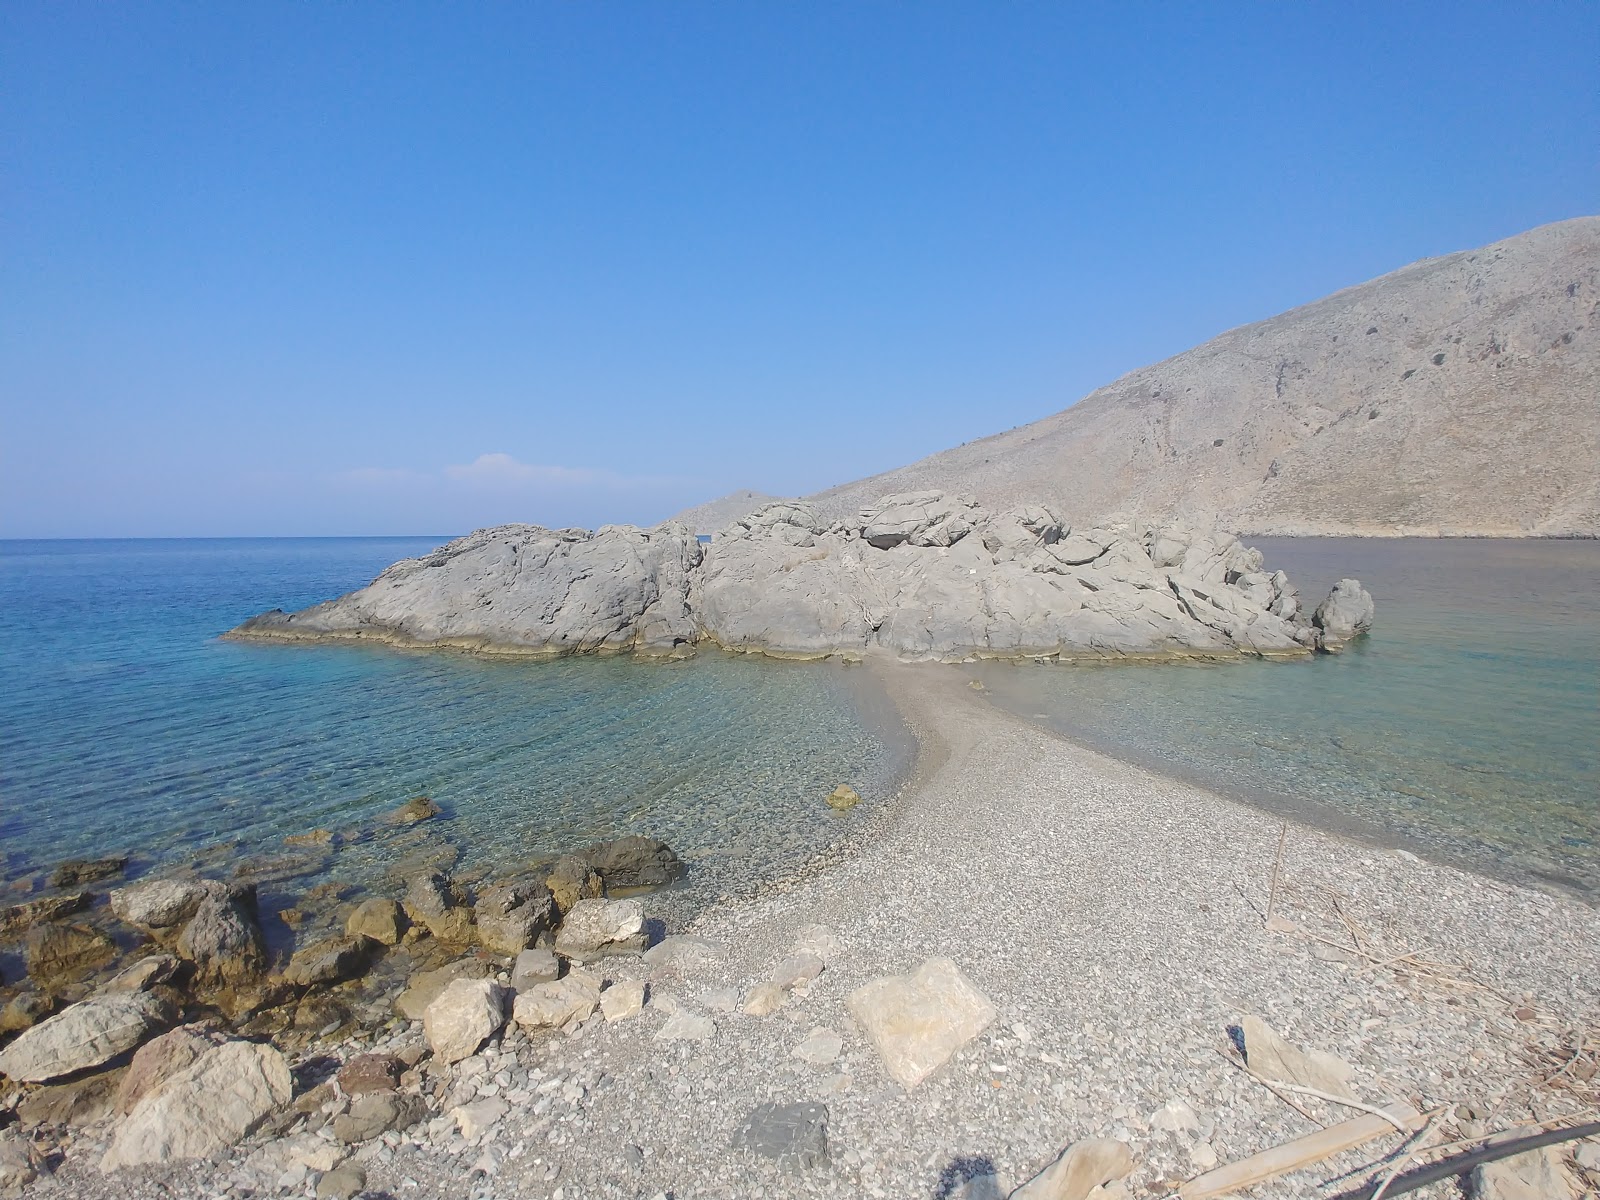 Agios Zacharias'in fotoğrafı turkuaz saf su yüzey ile